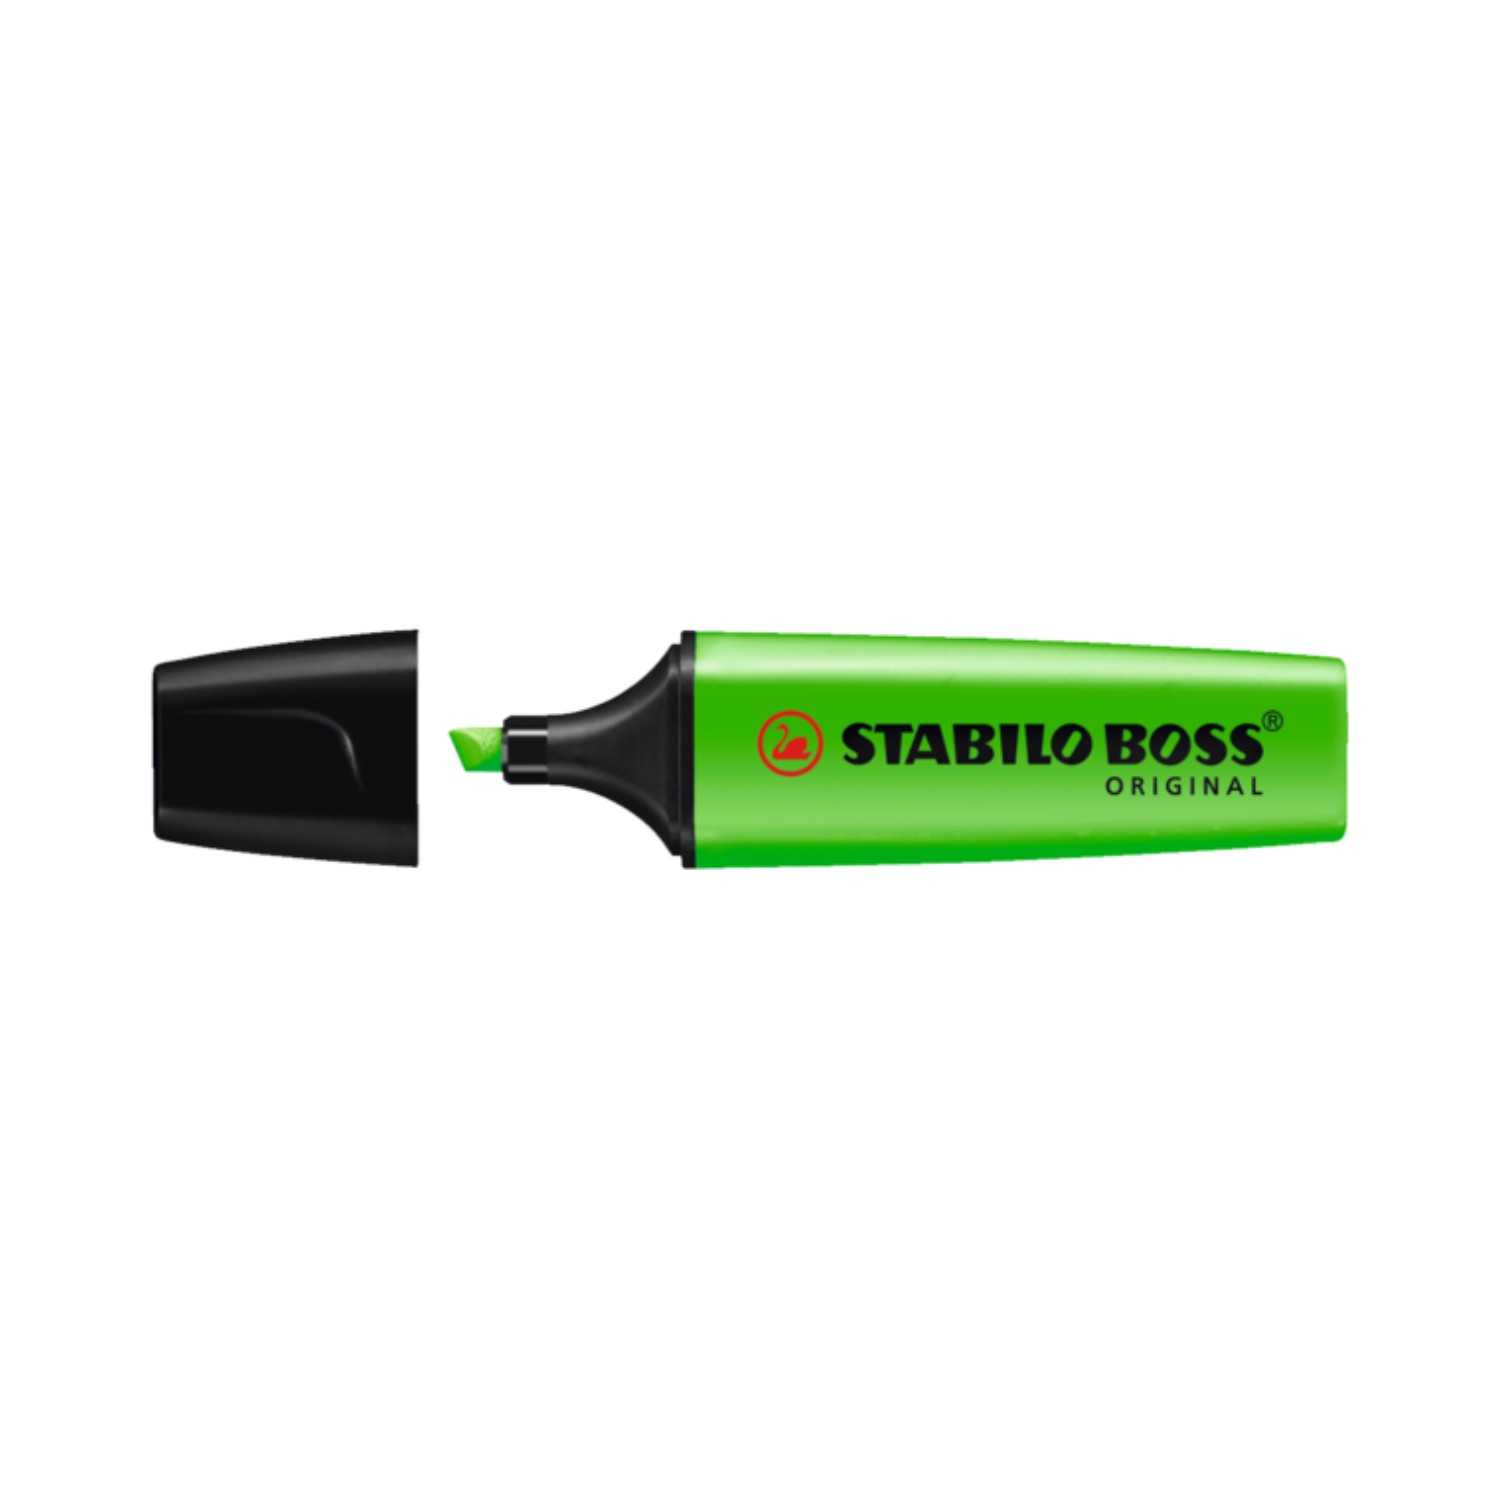 Stabilo+Boss+Original+Highlighter+Green